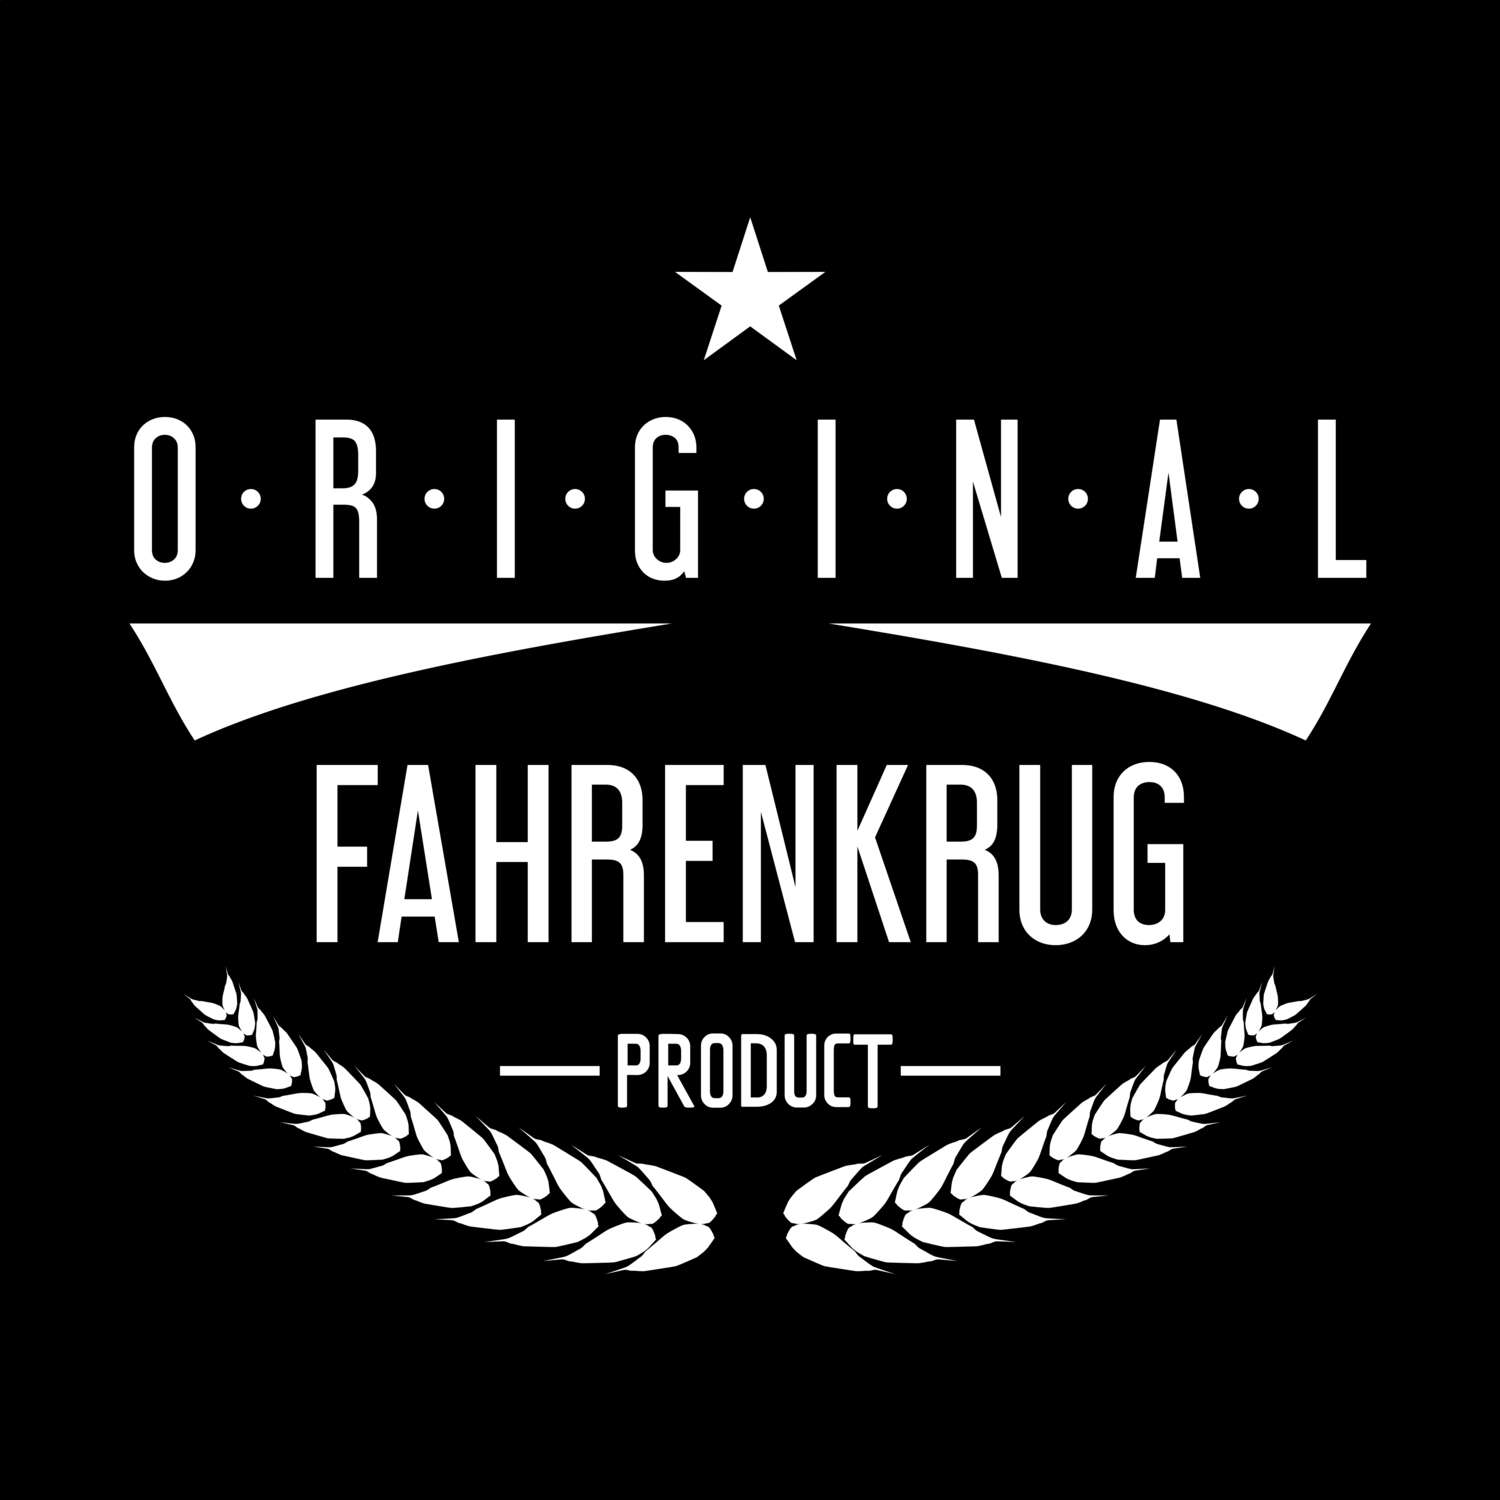 Fahrenkrug T-Shirt »Original Product«